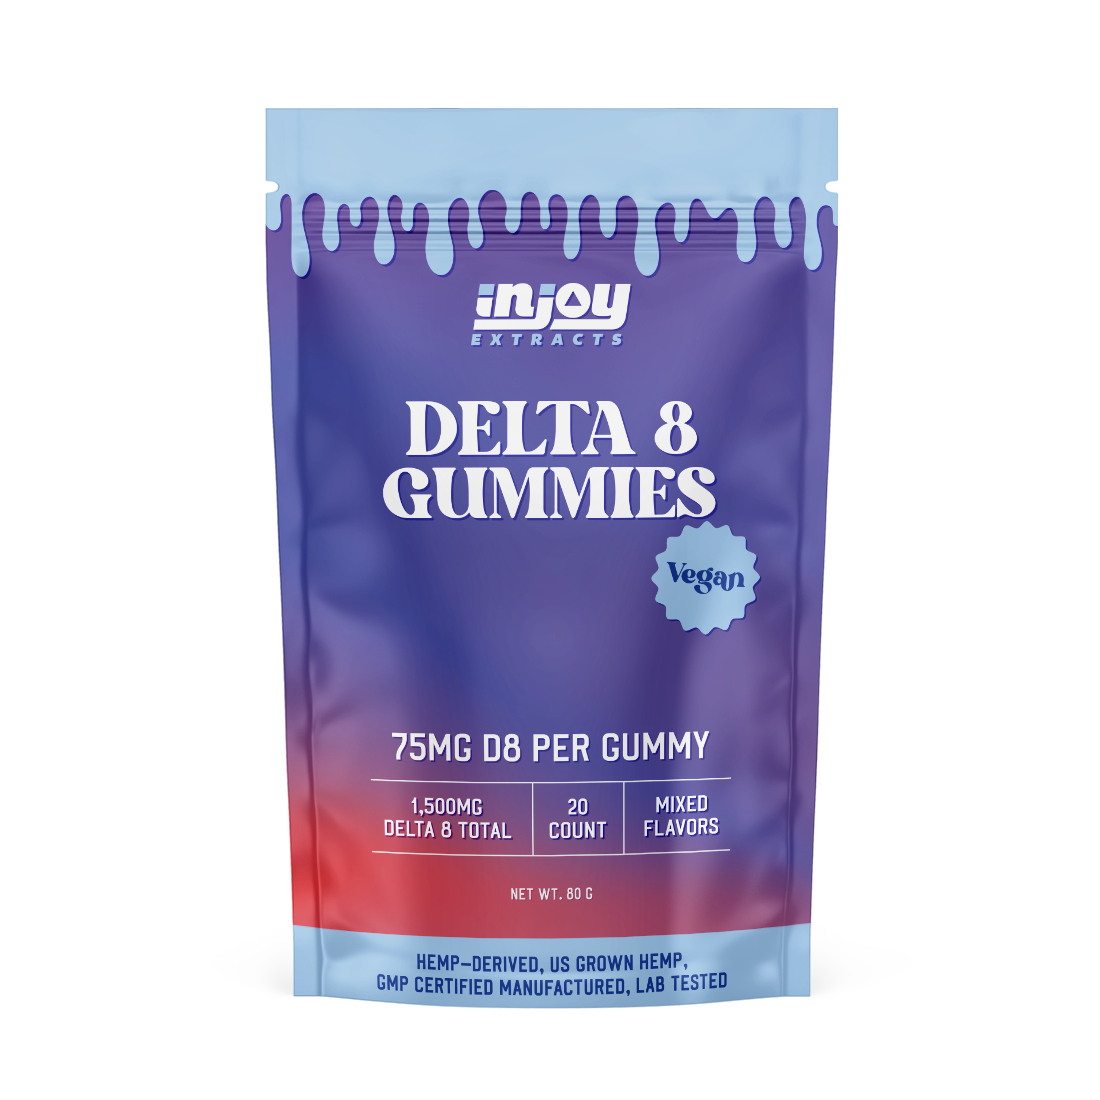 75mg Delta 8 Gummies